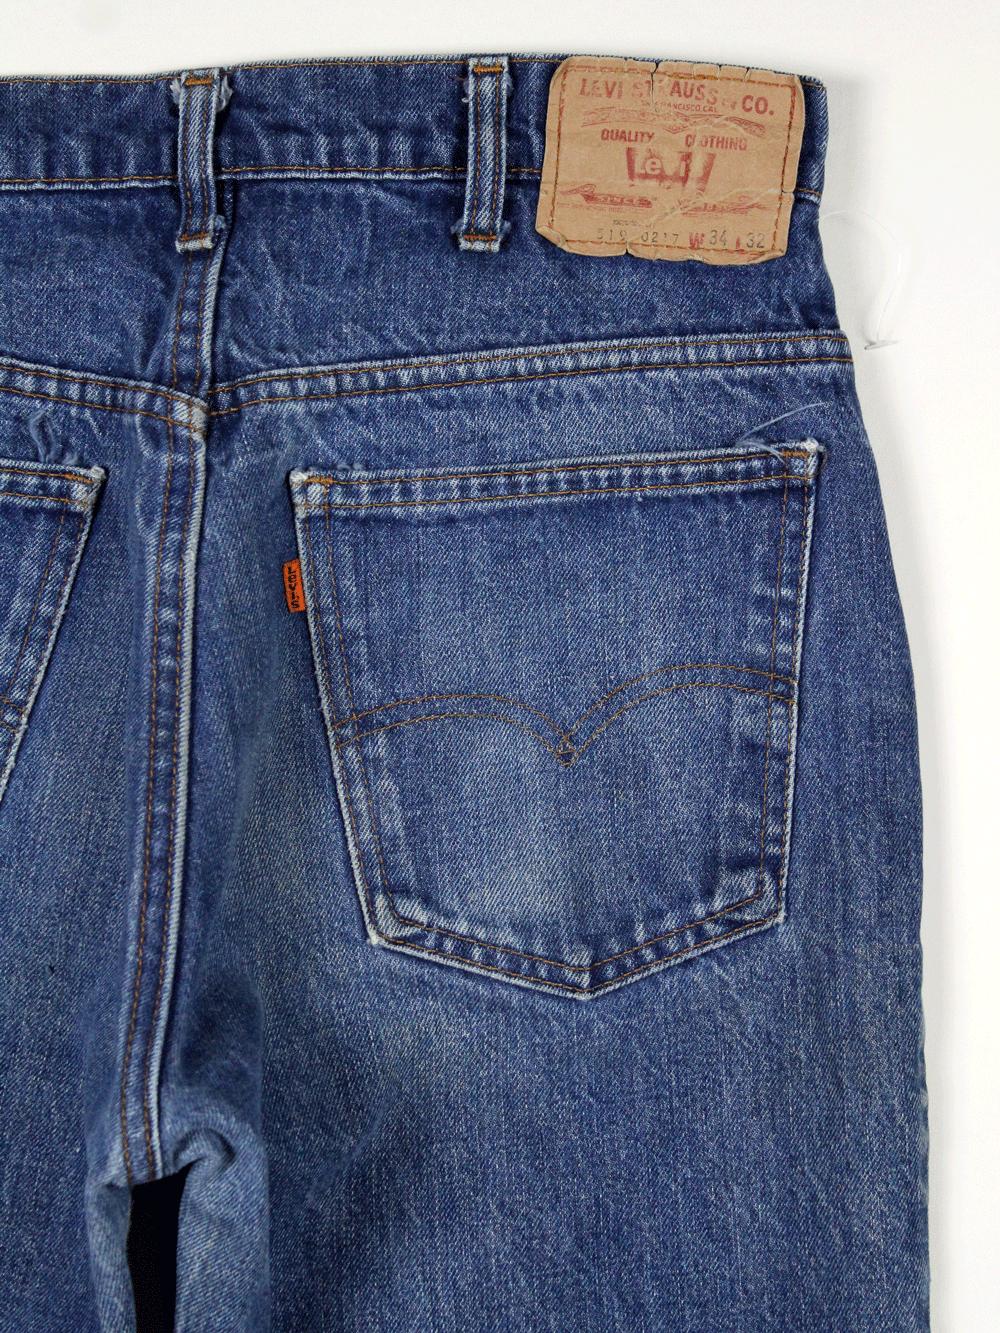 Jeans Levi's 519 Vintage (Etiqueta Naranja)